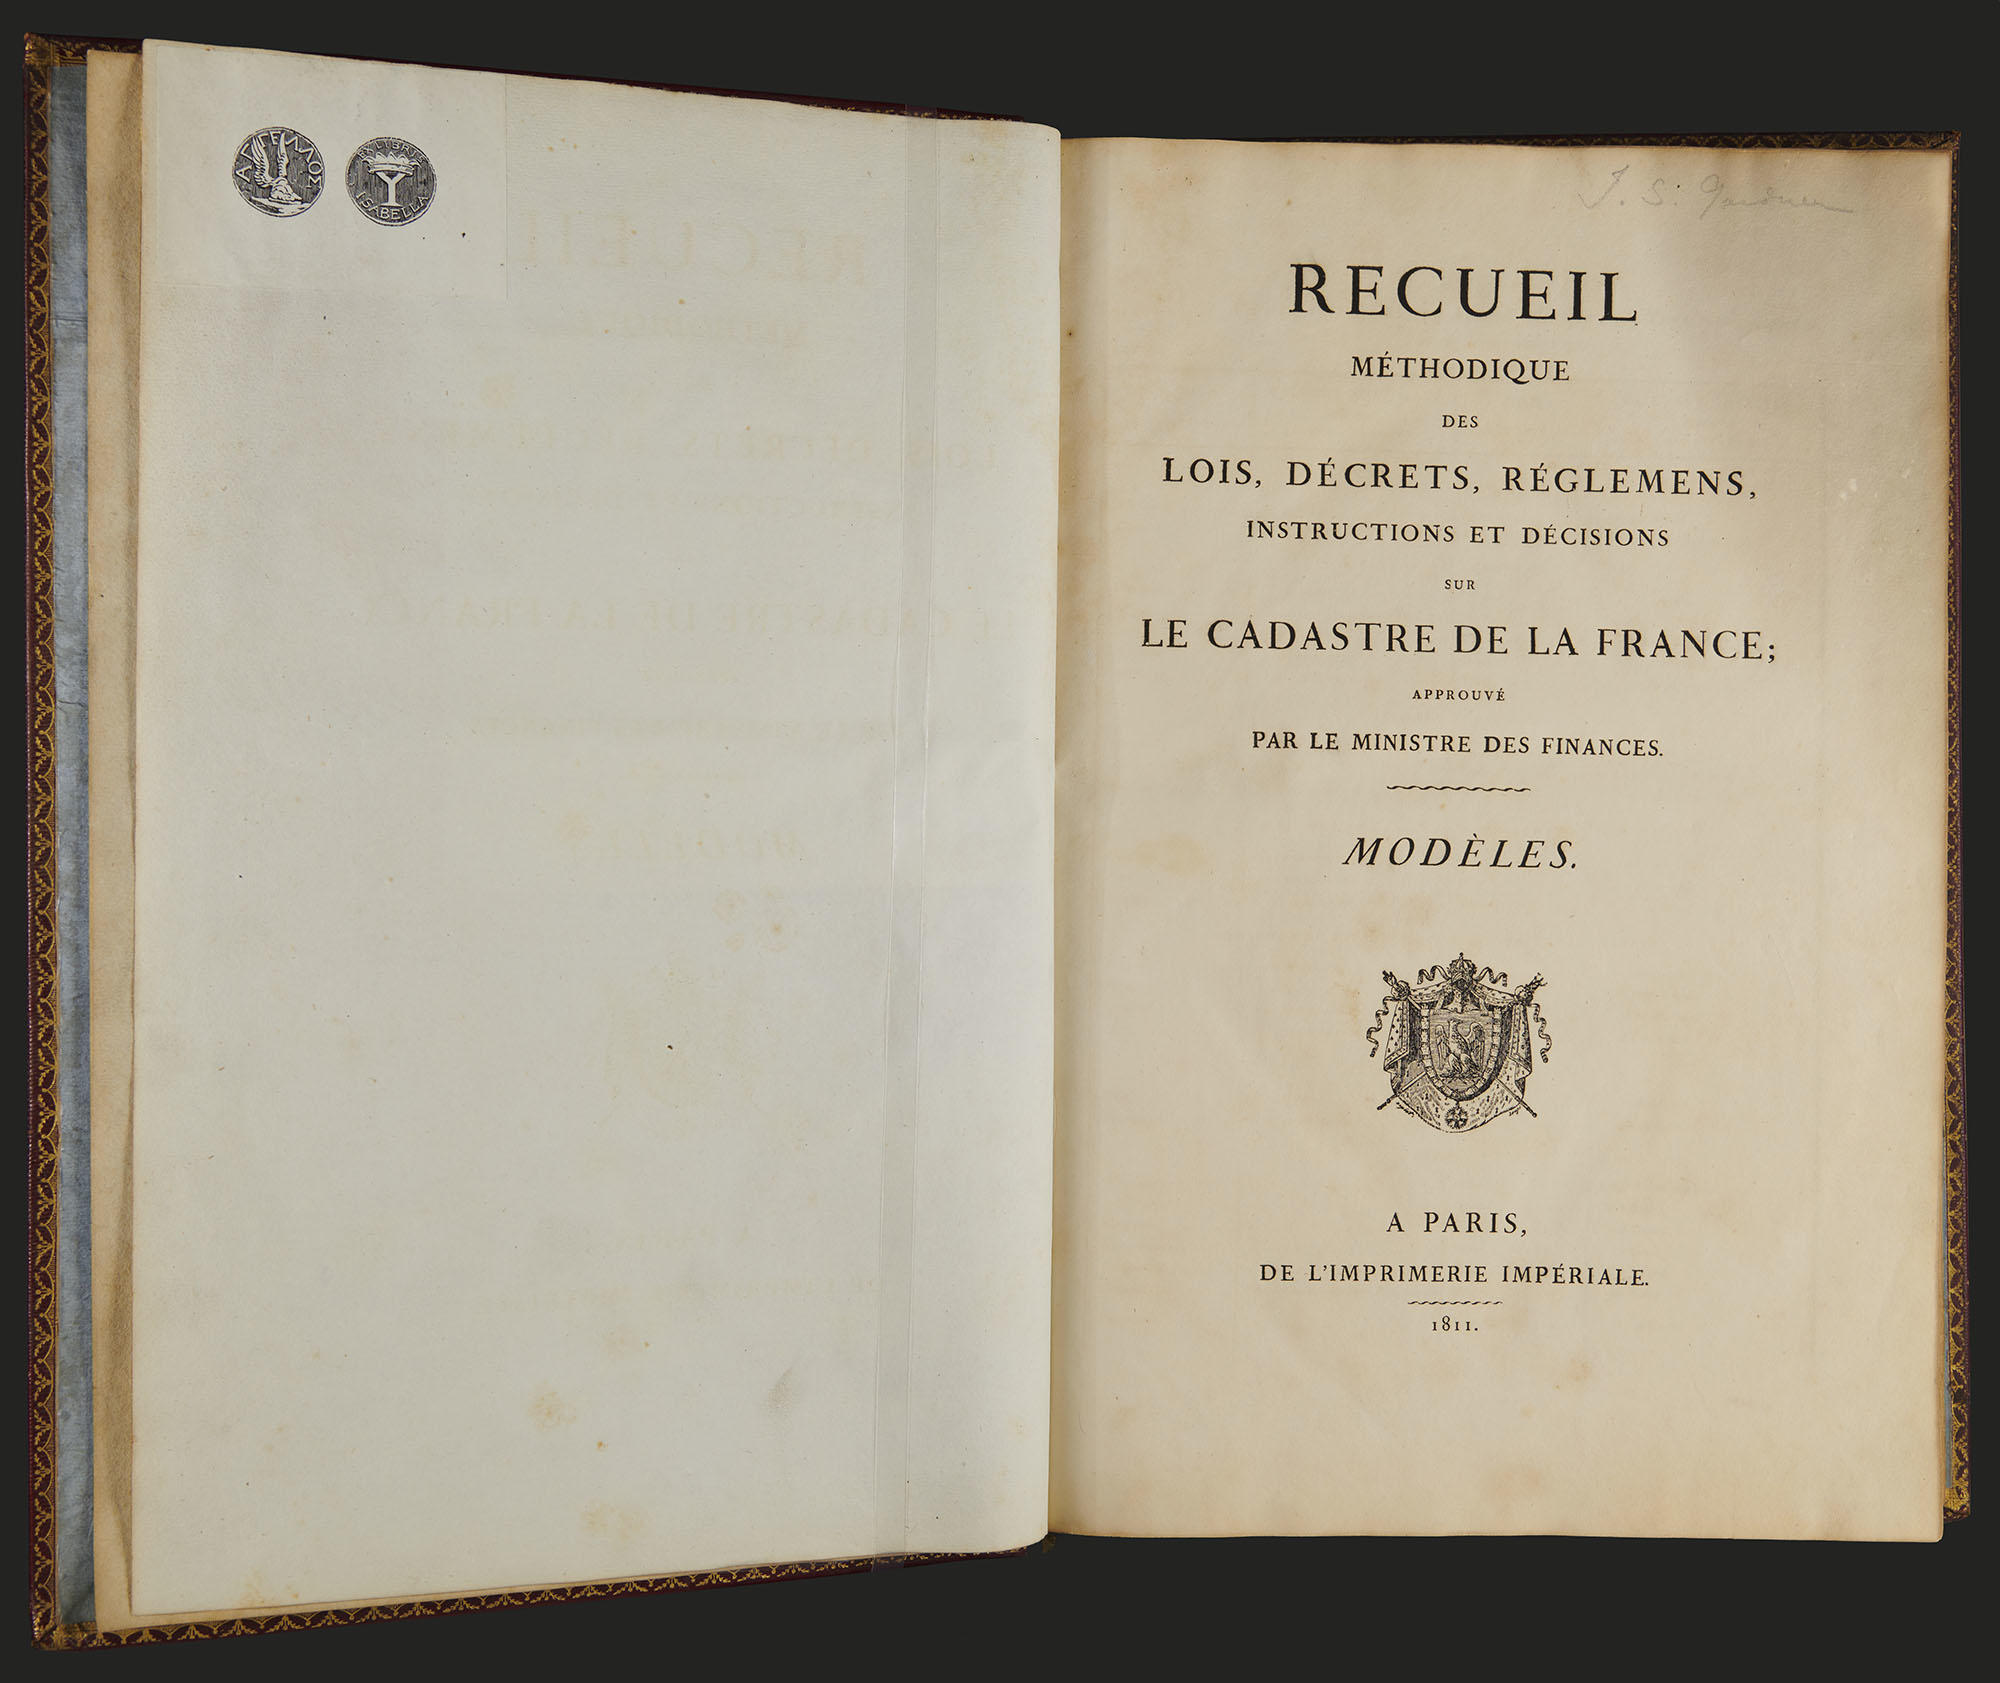 Title page of a Recueil Methodique des Lois, Decrets, Reglemens, Instructions et Decisions displaying the full book title and publication information.